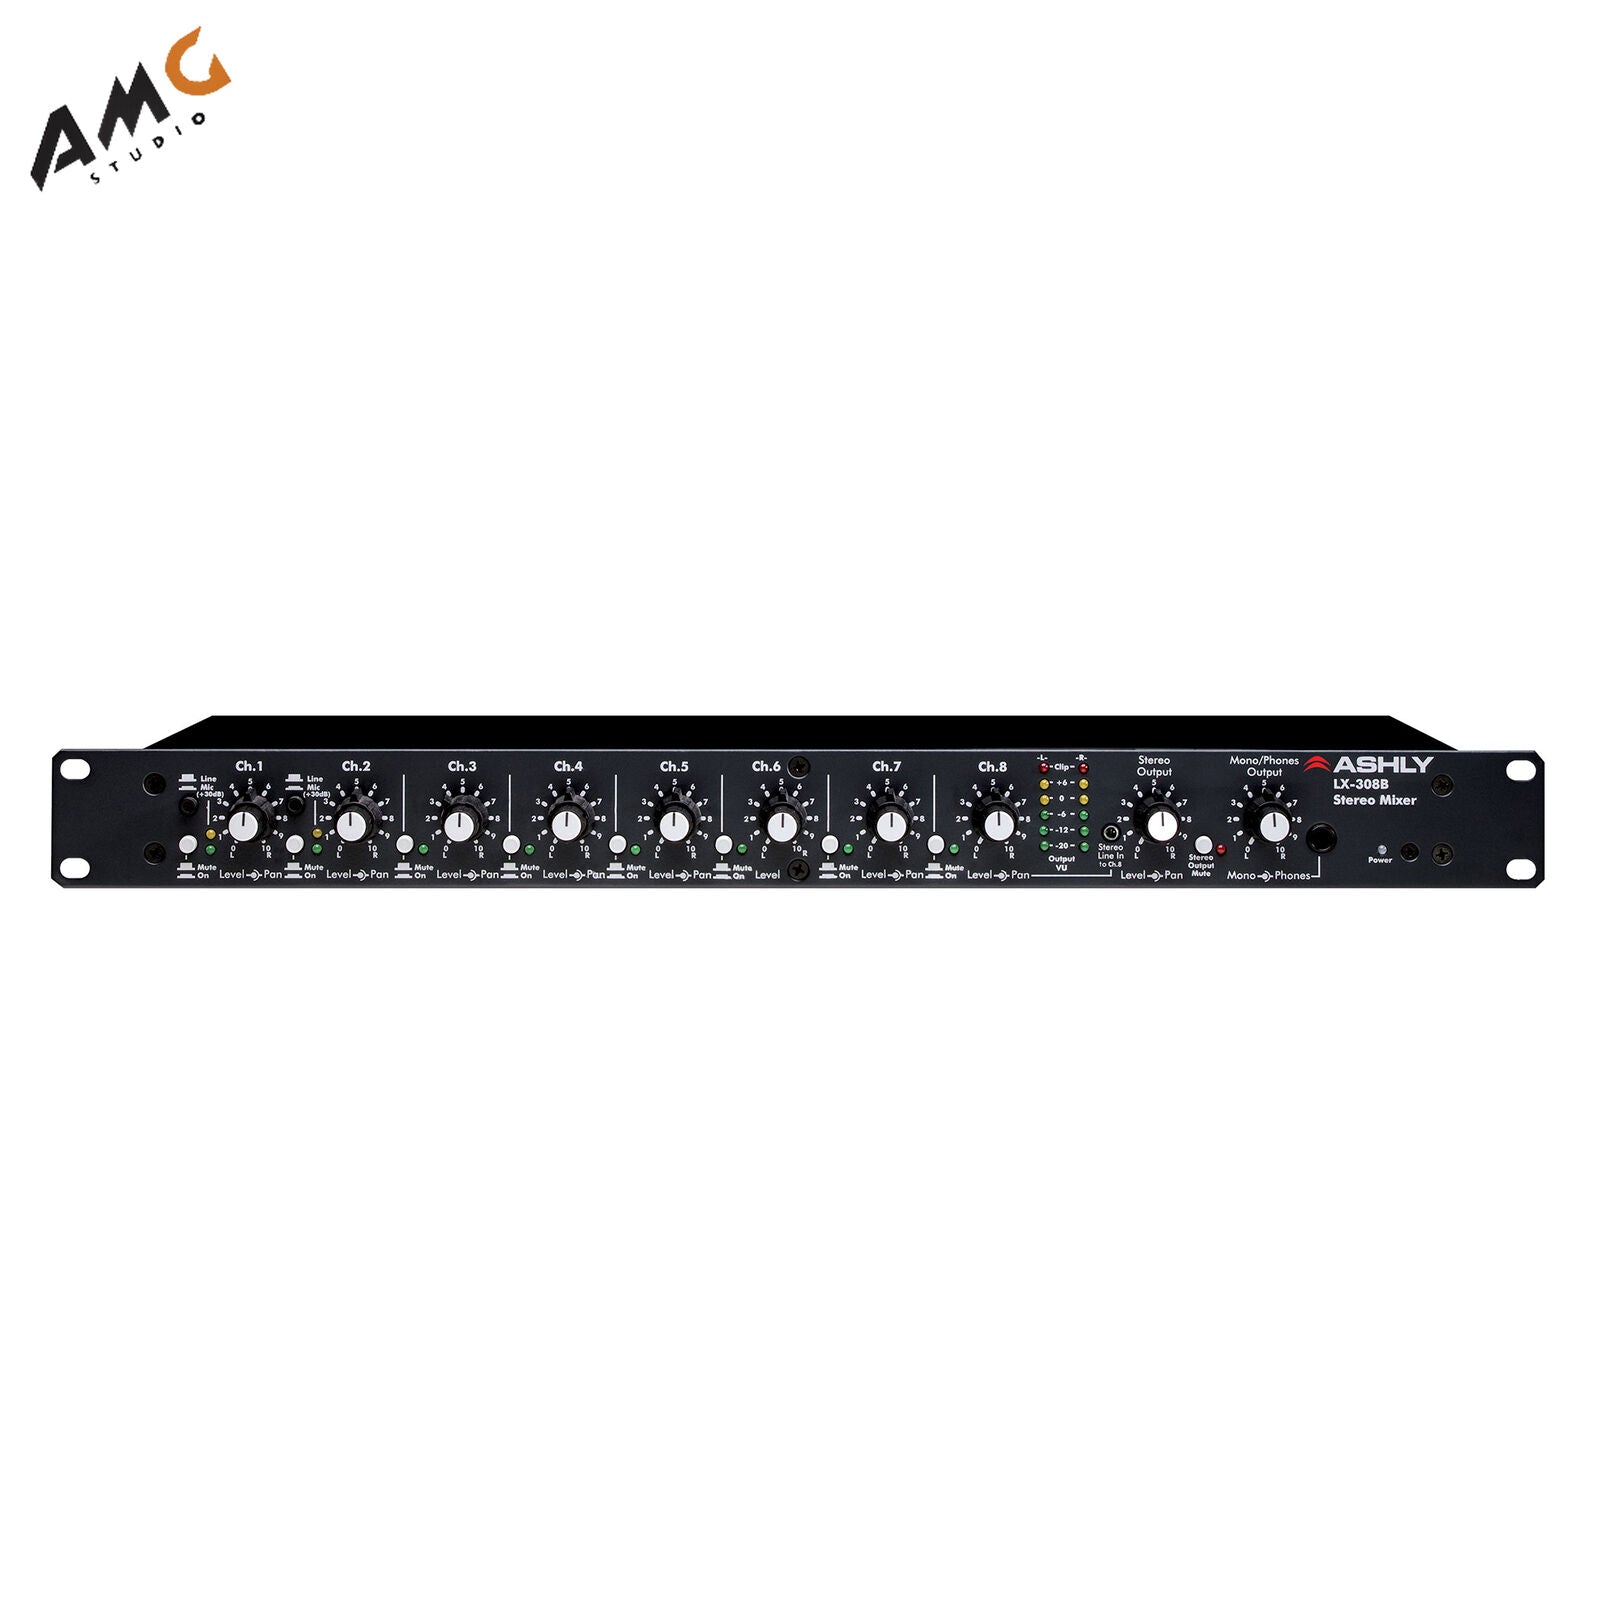 ASHLY LX-308B Rackmount 8 Channel Stereo Line Mixer - Studio AMG